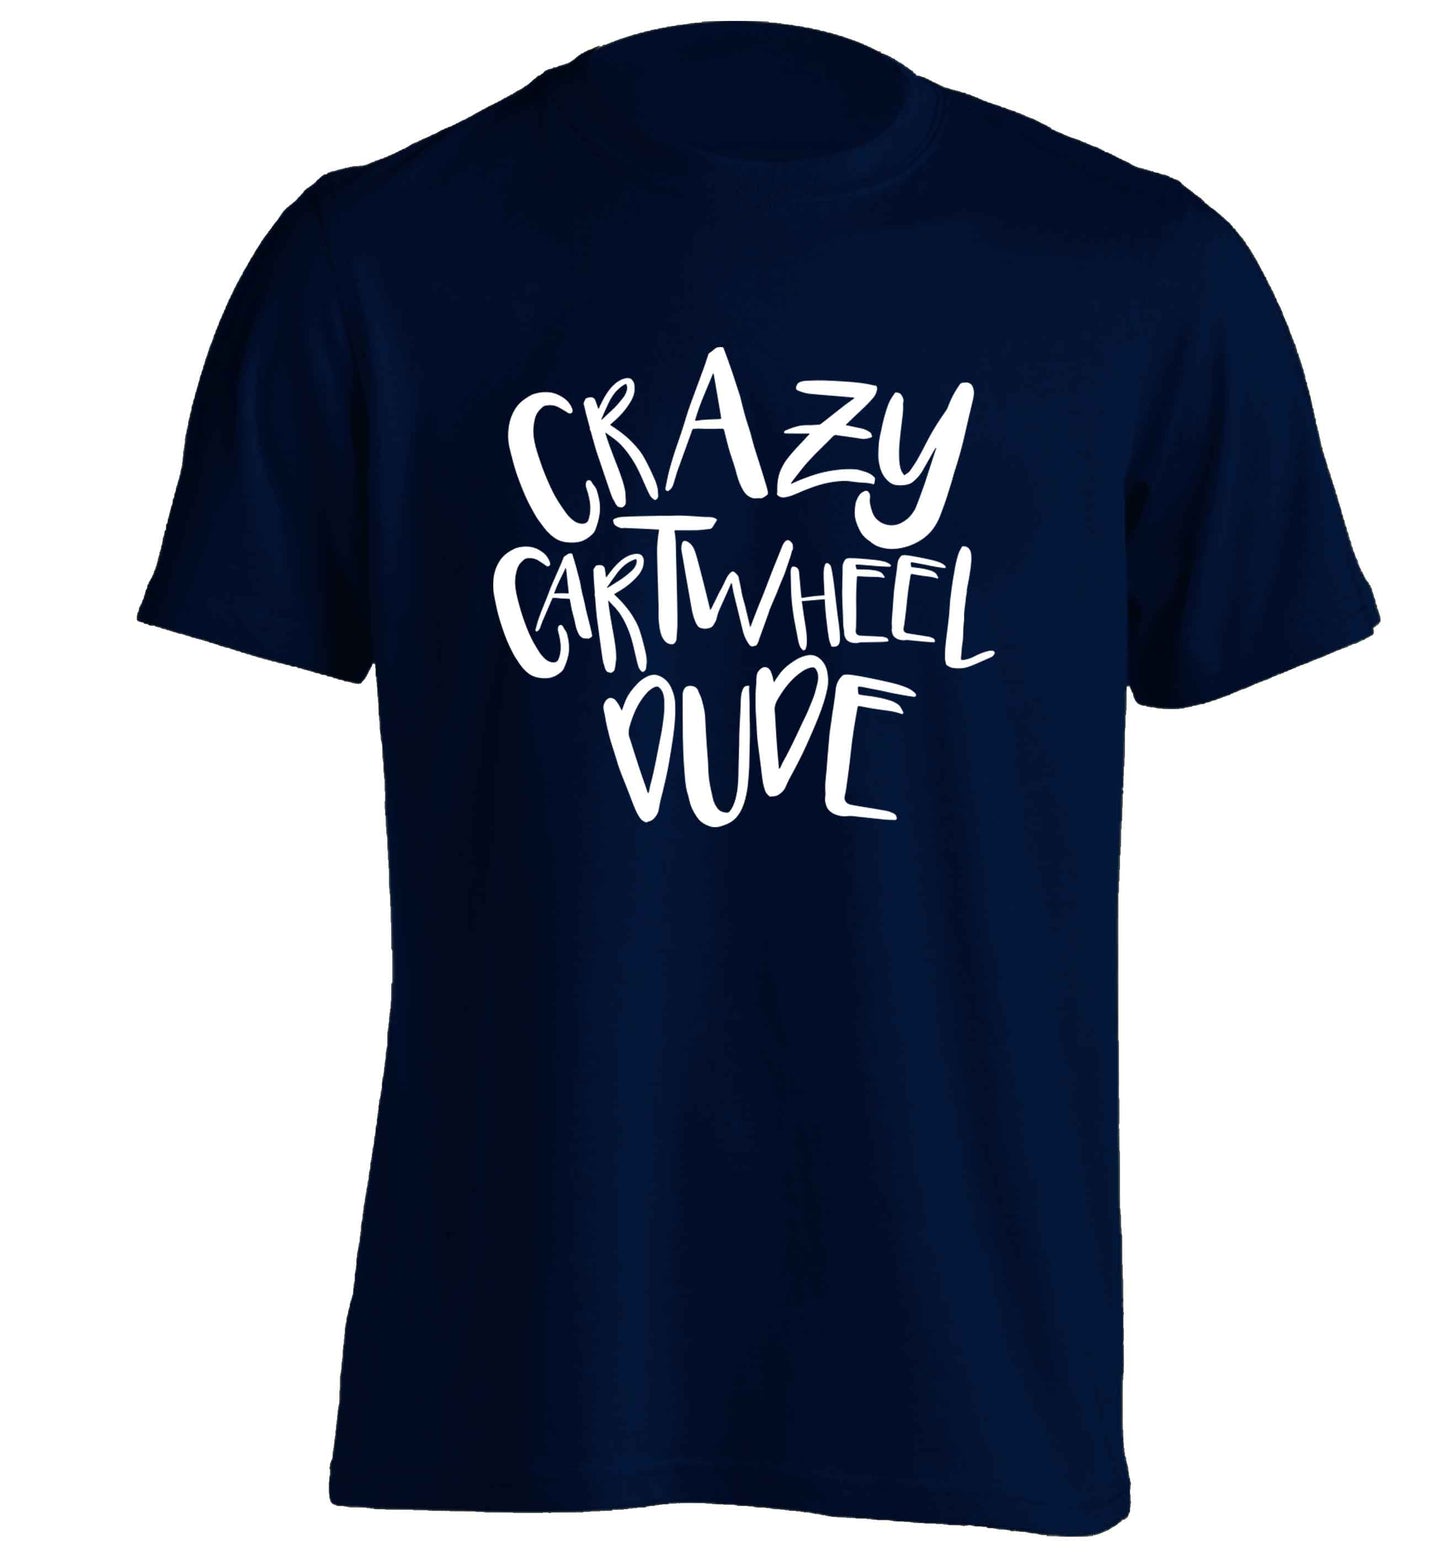 Crazy cartwheel dude adults unisex navy Tshirt 2XL